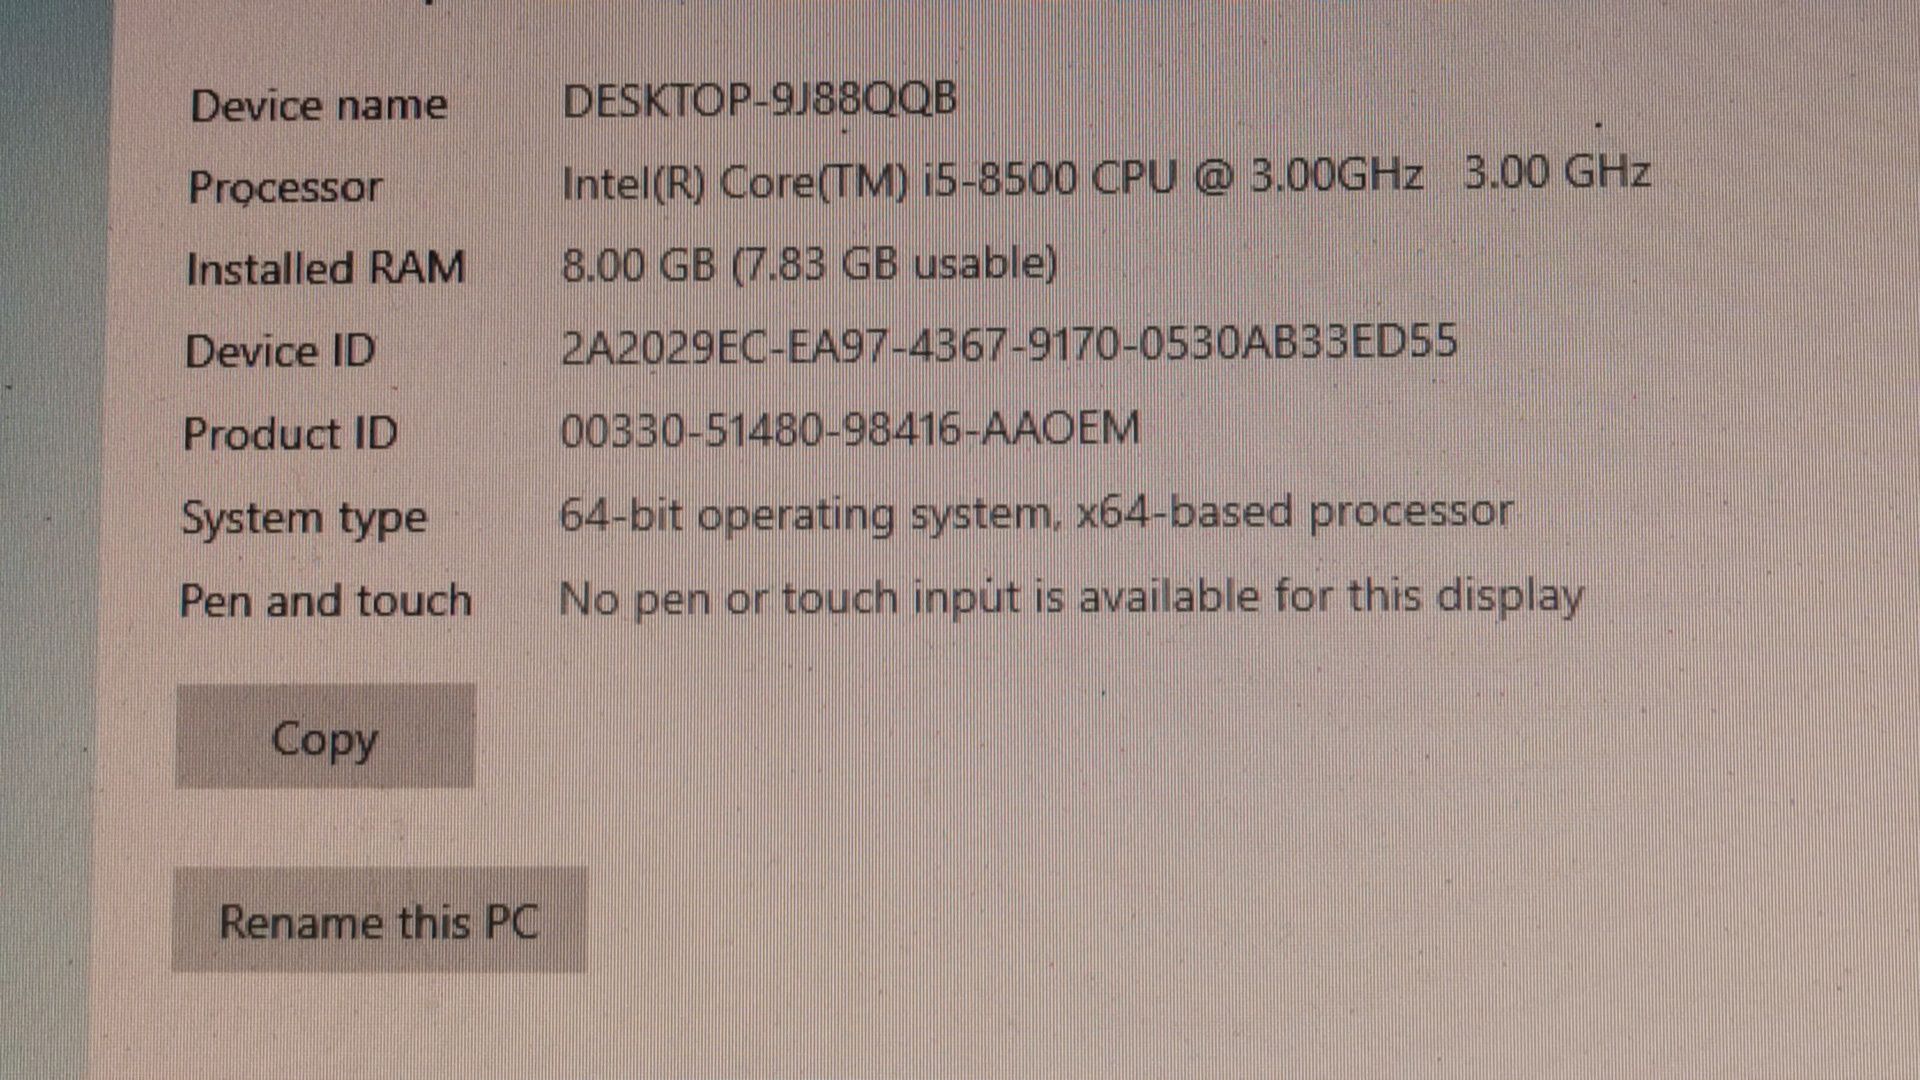 Dell 3060 (ddr4, SSD.m2 256gb))